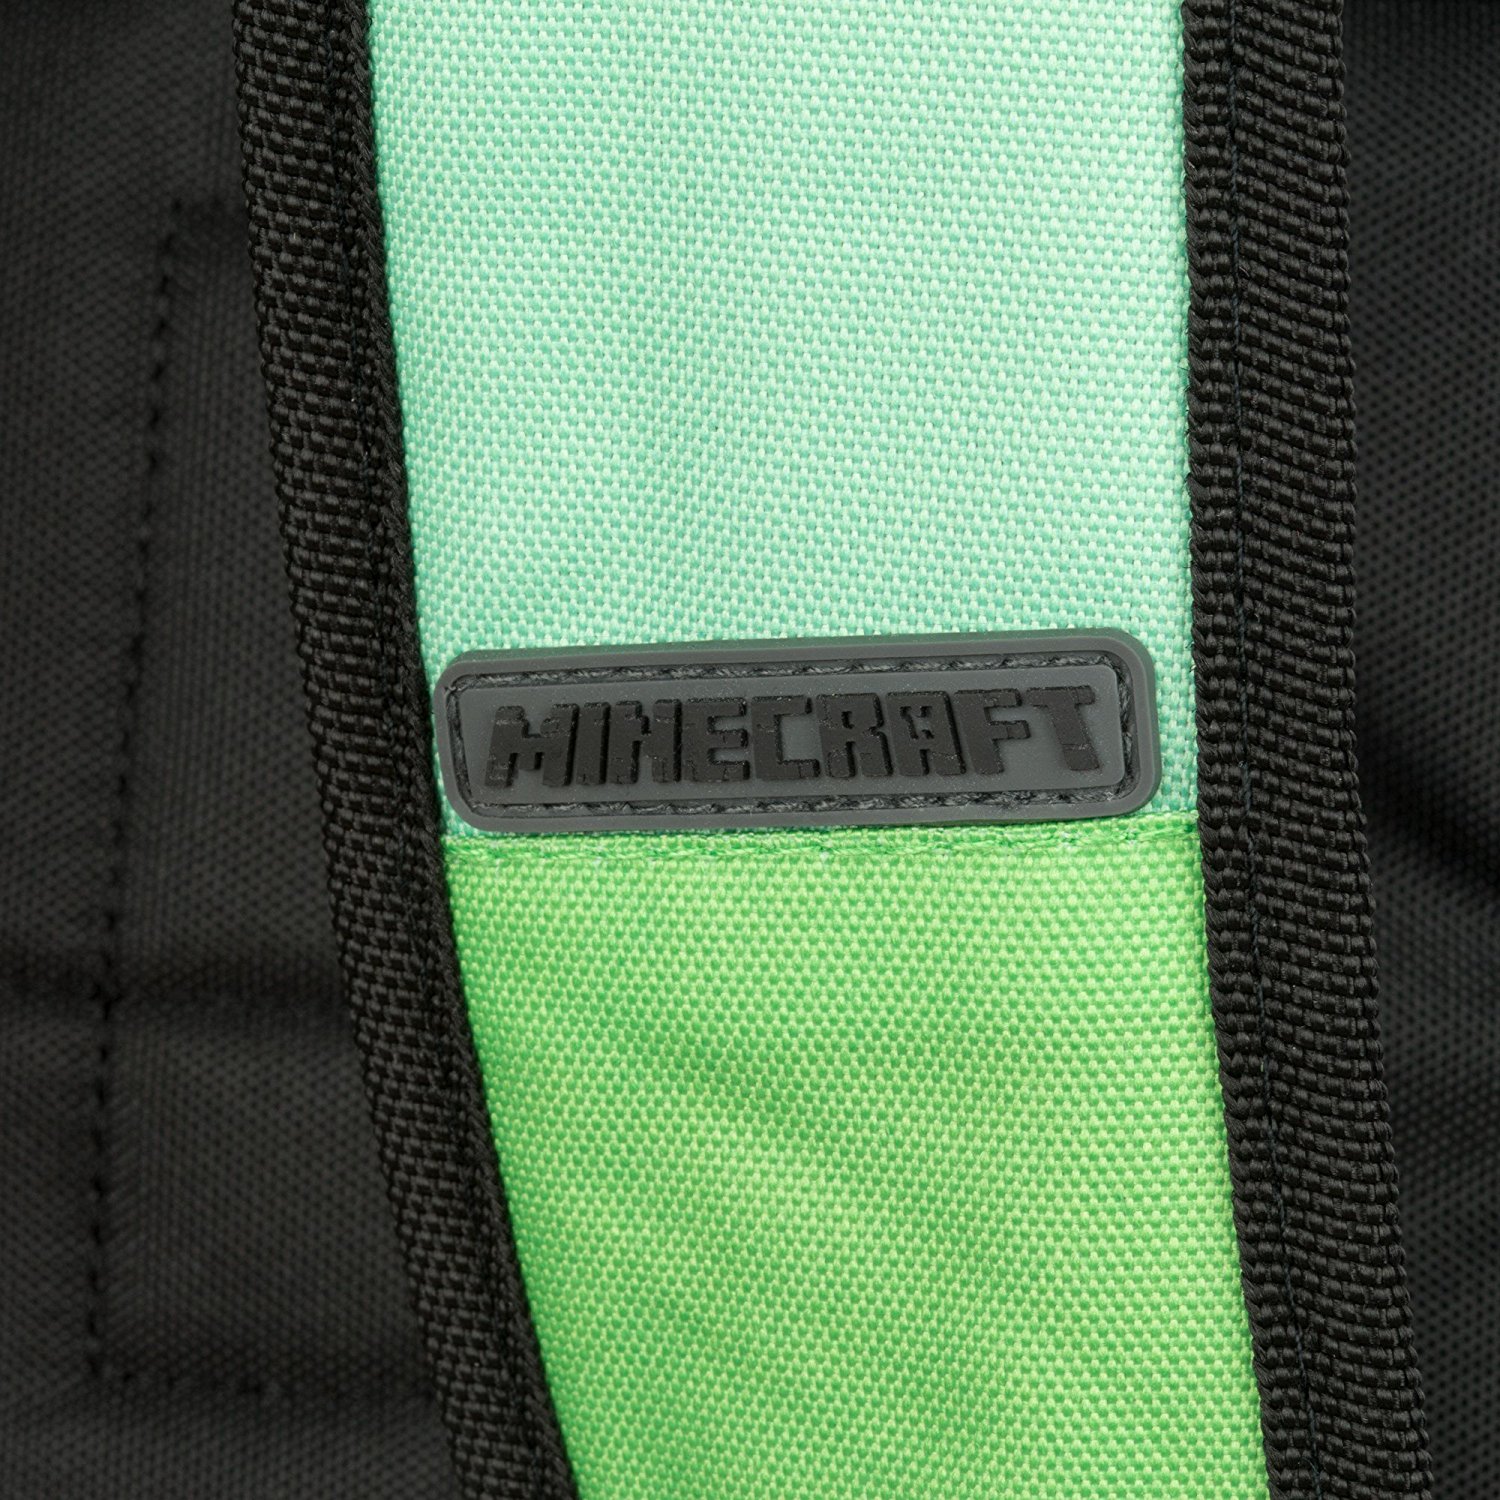 Balo Minecraft creeper backpack